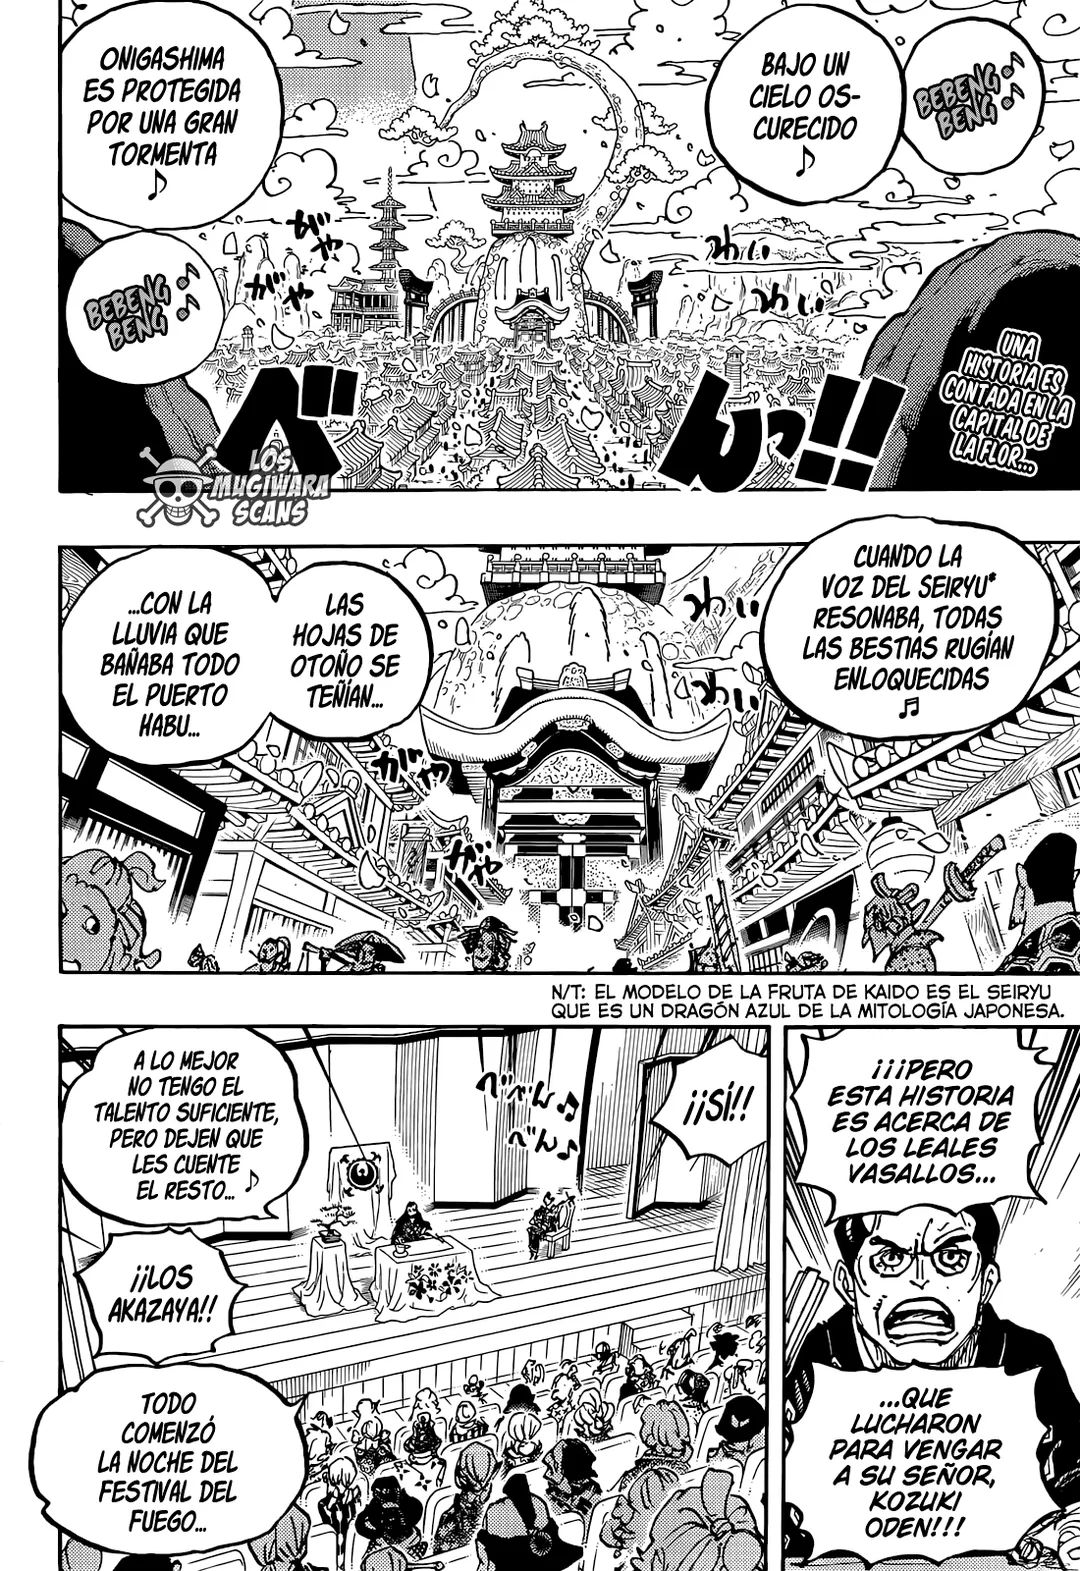 Manga One Piece 1,057 Online - InManga